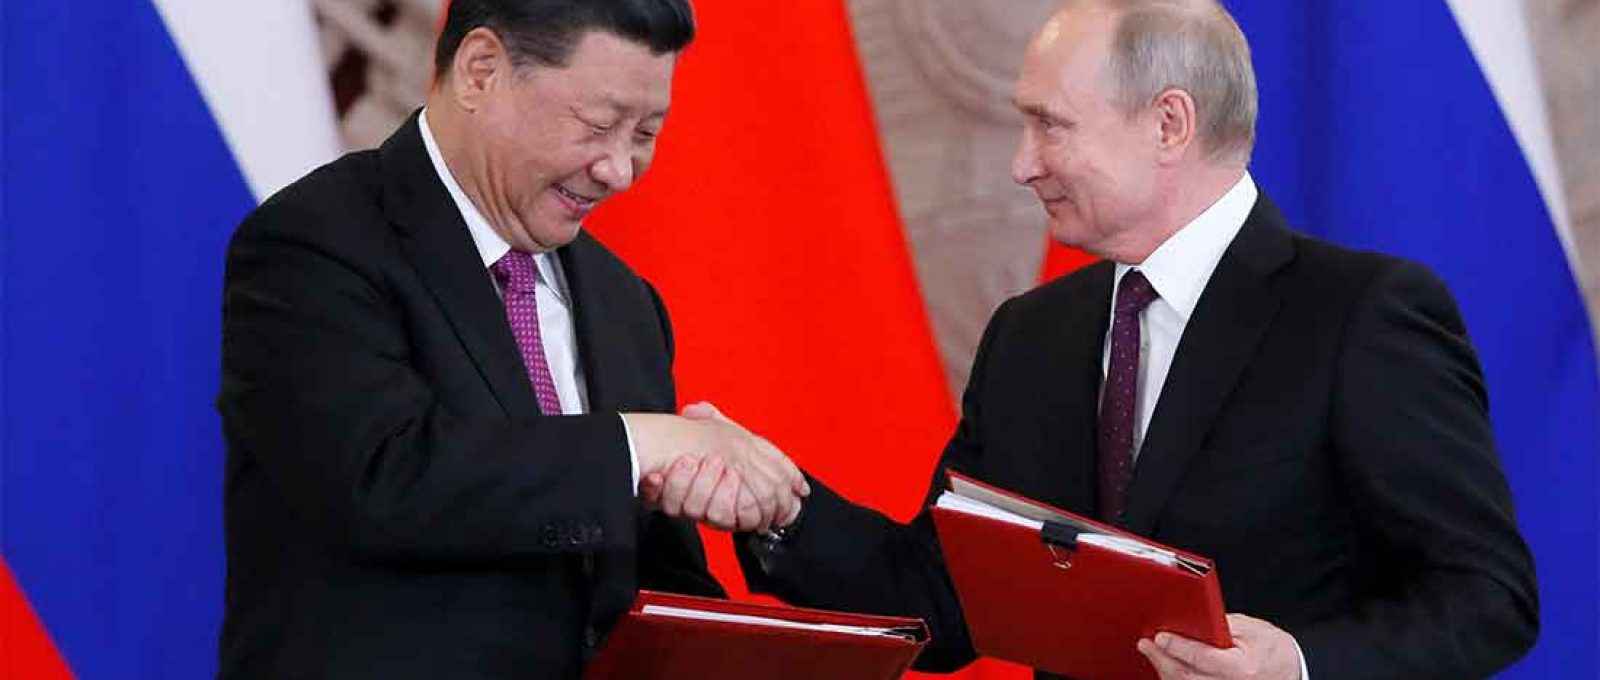 Os presidentes Xi Jinping, da China, e Vladimir Putin, da Rússia (Foto: Evgenia Novozhenina/Reuters).